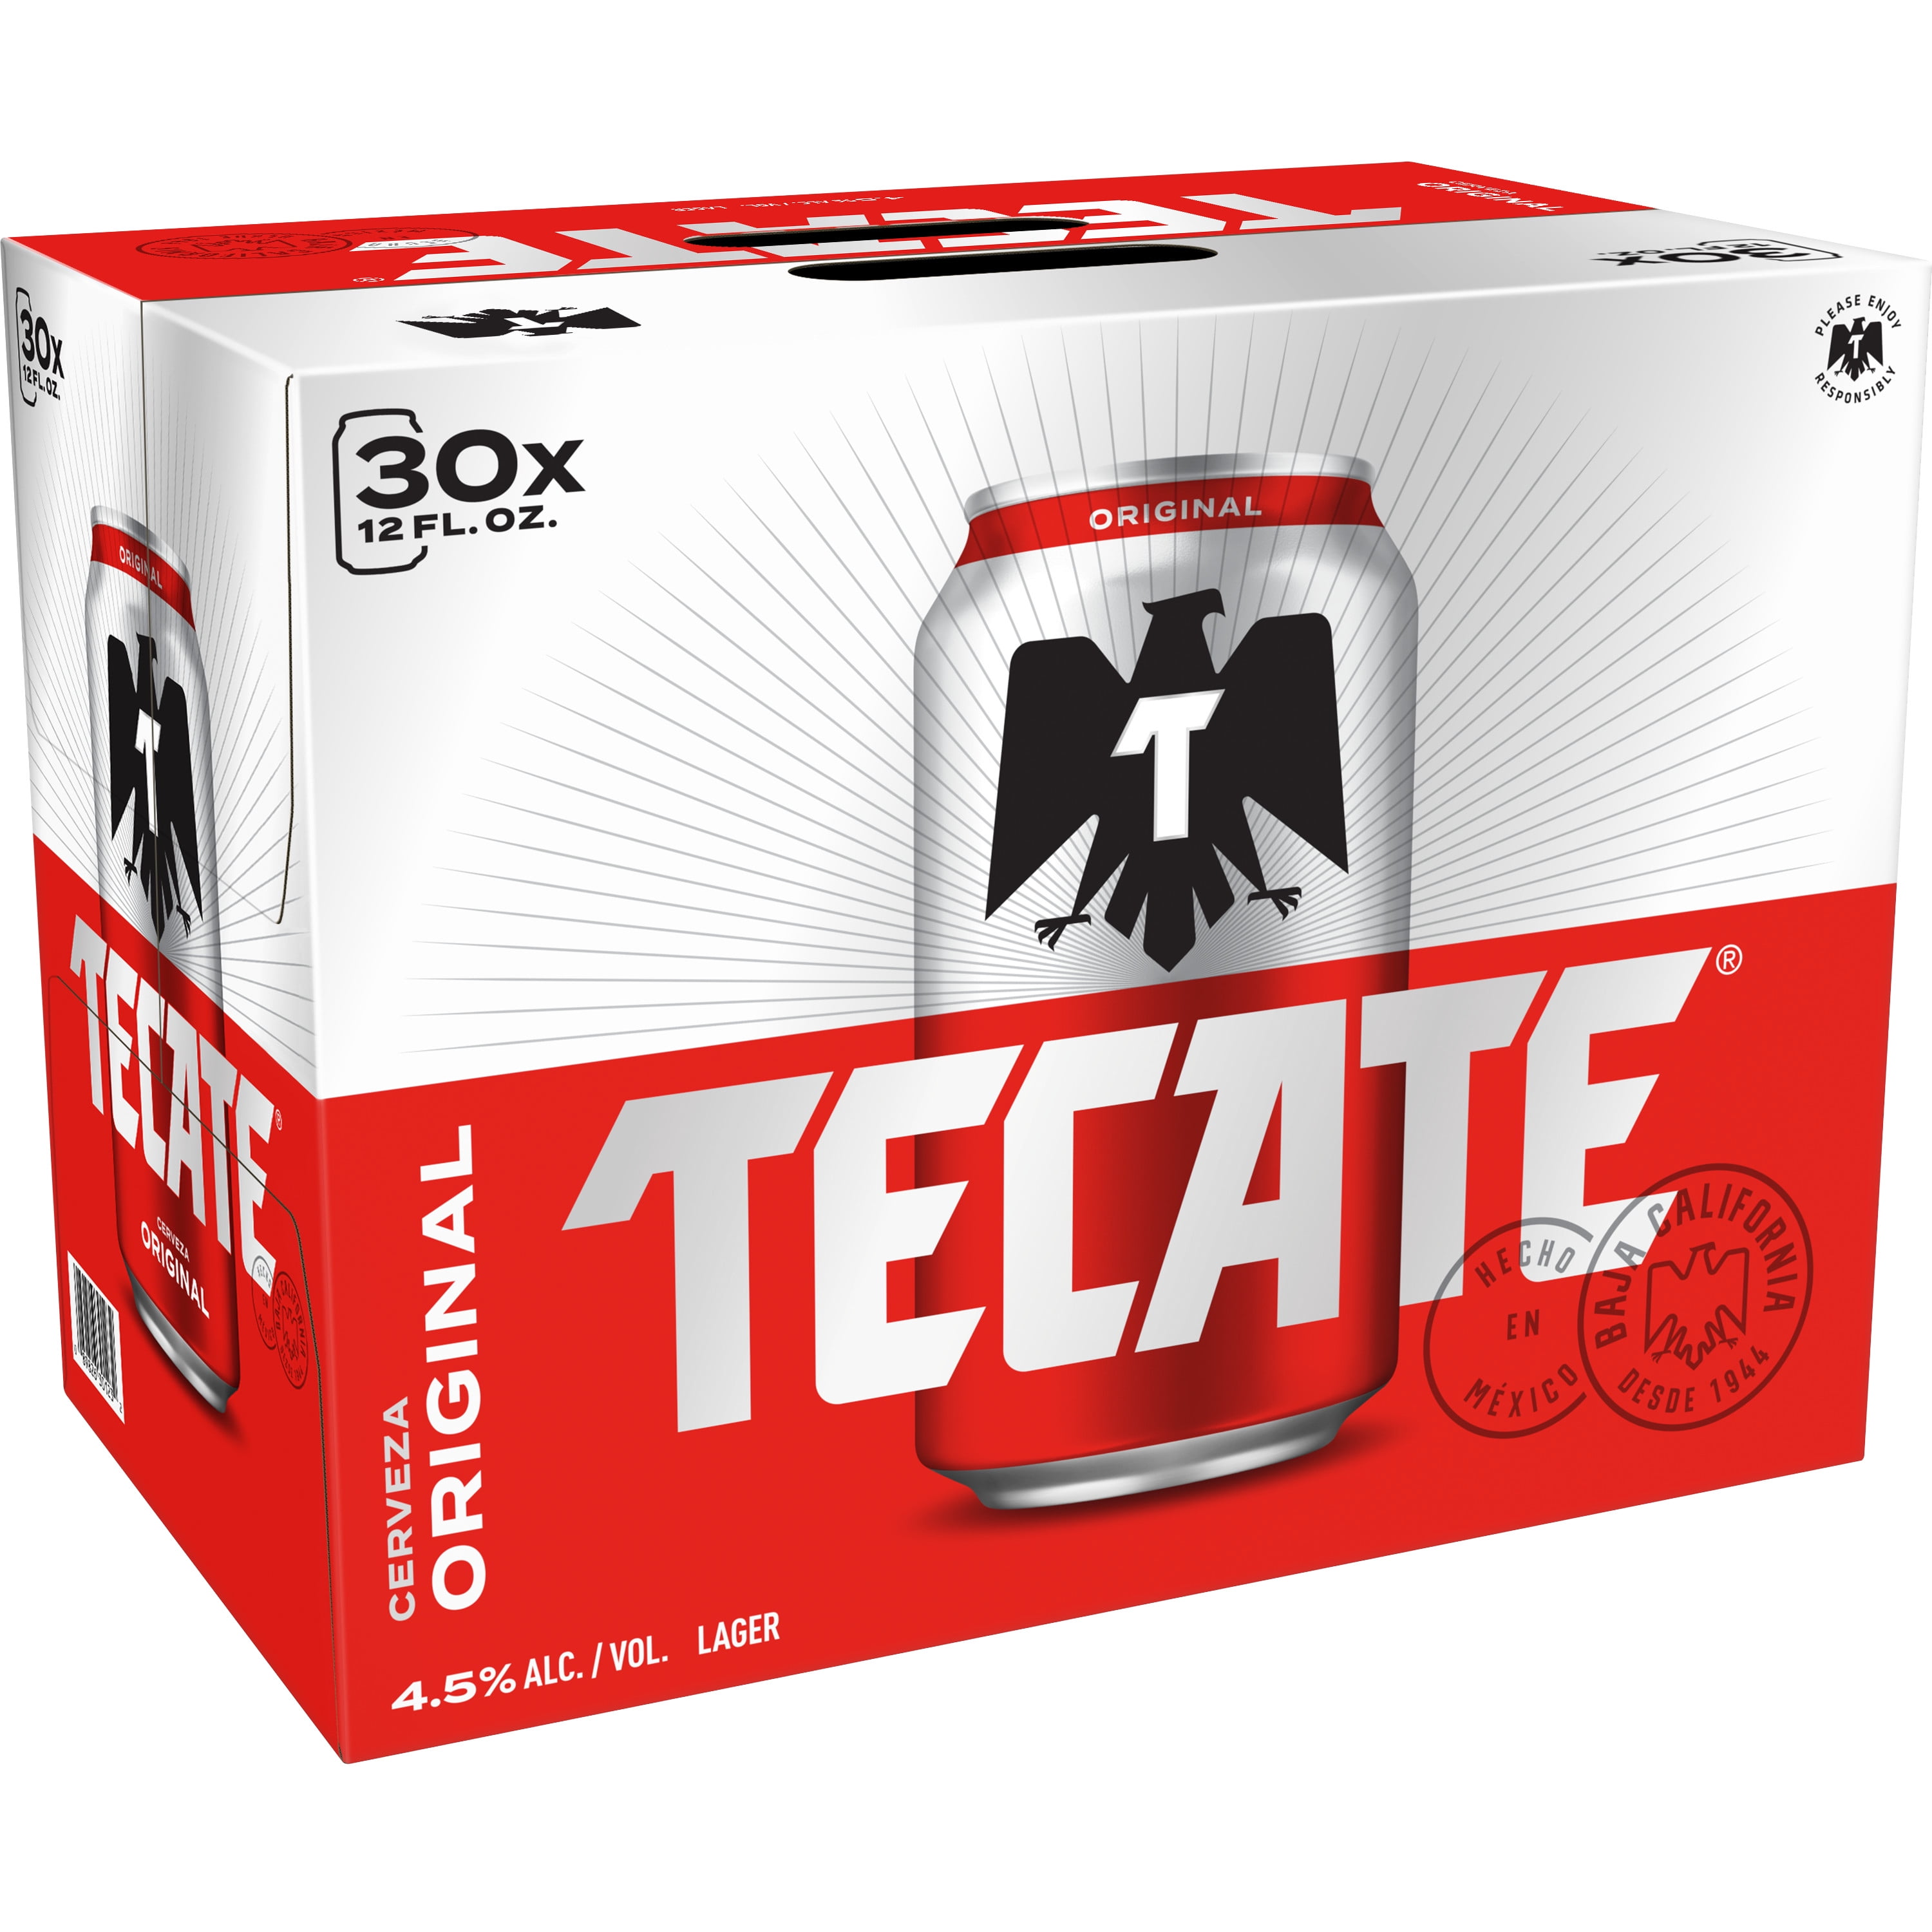 Tecate Original Mexican Lager Beer 30